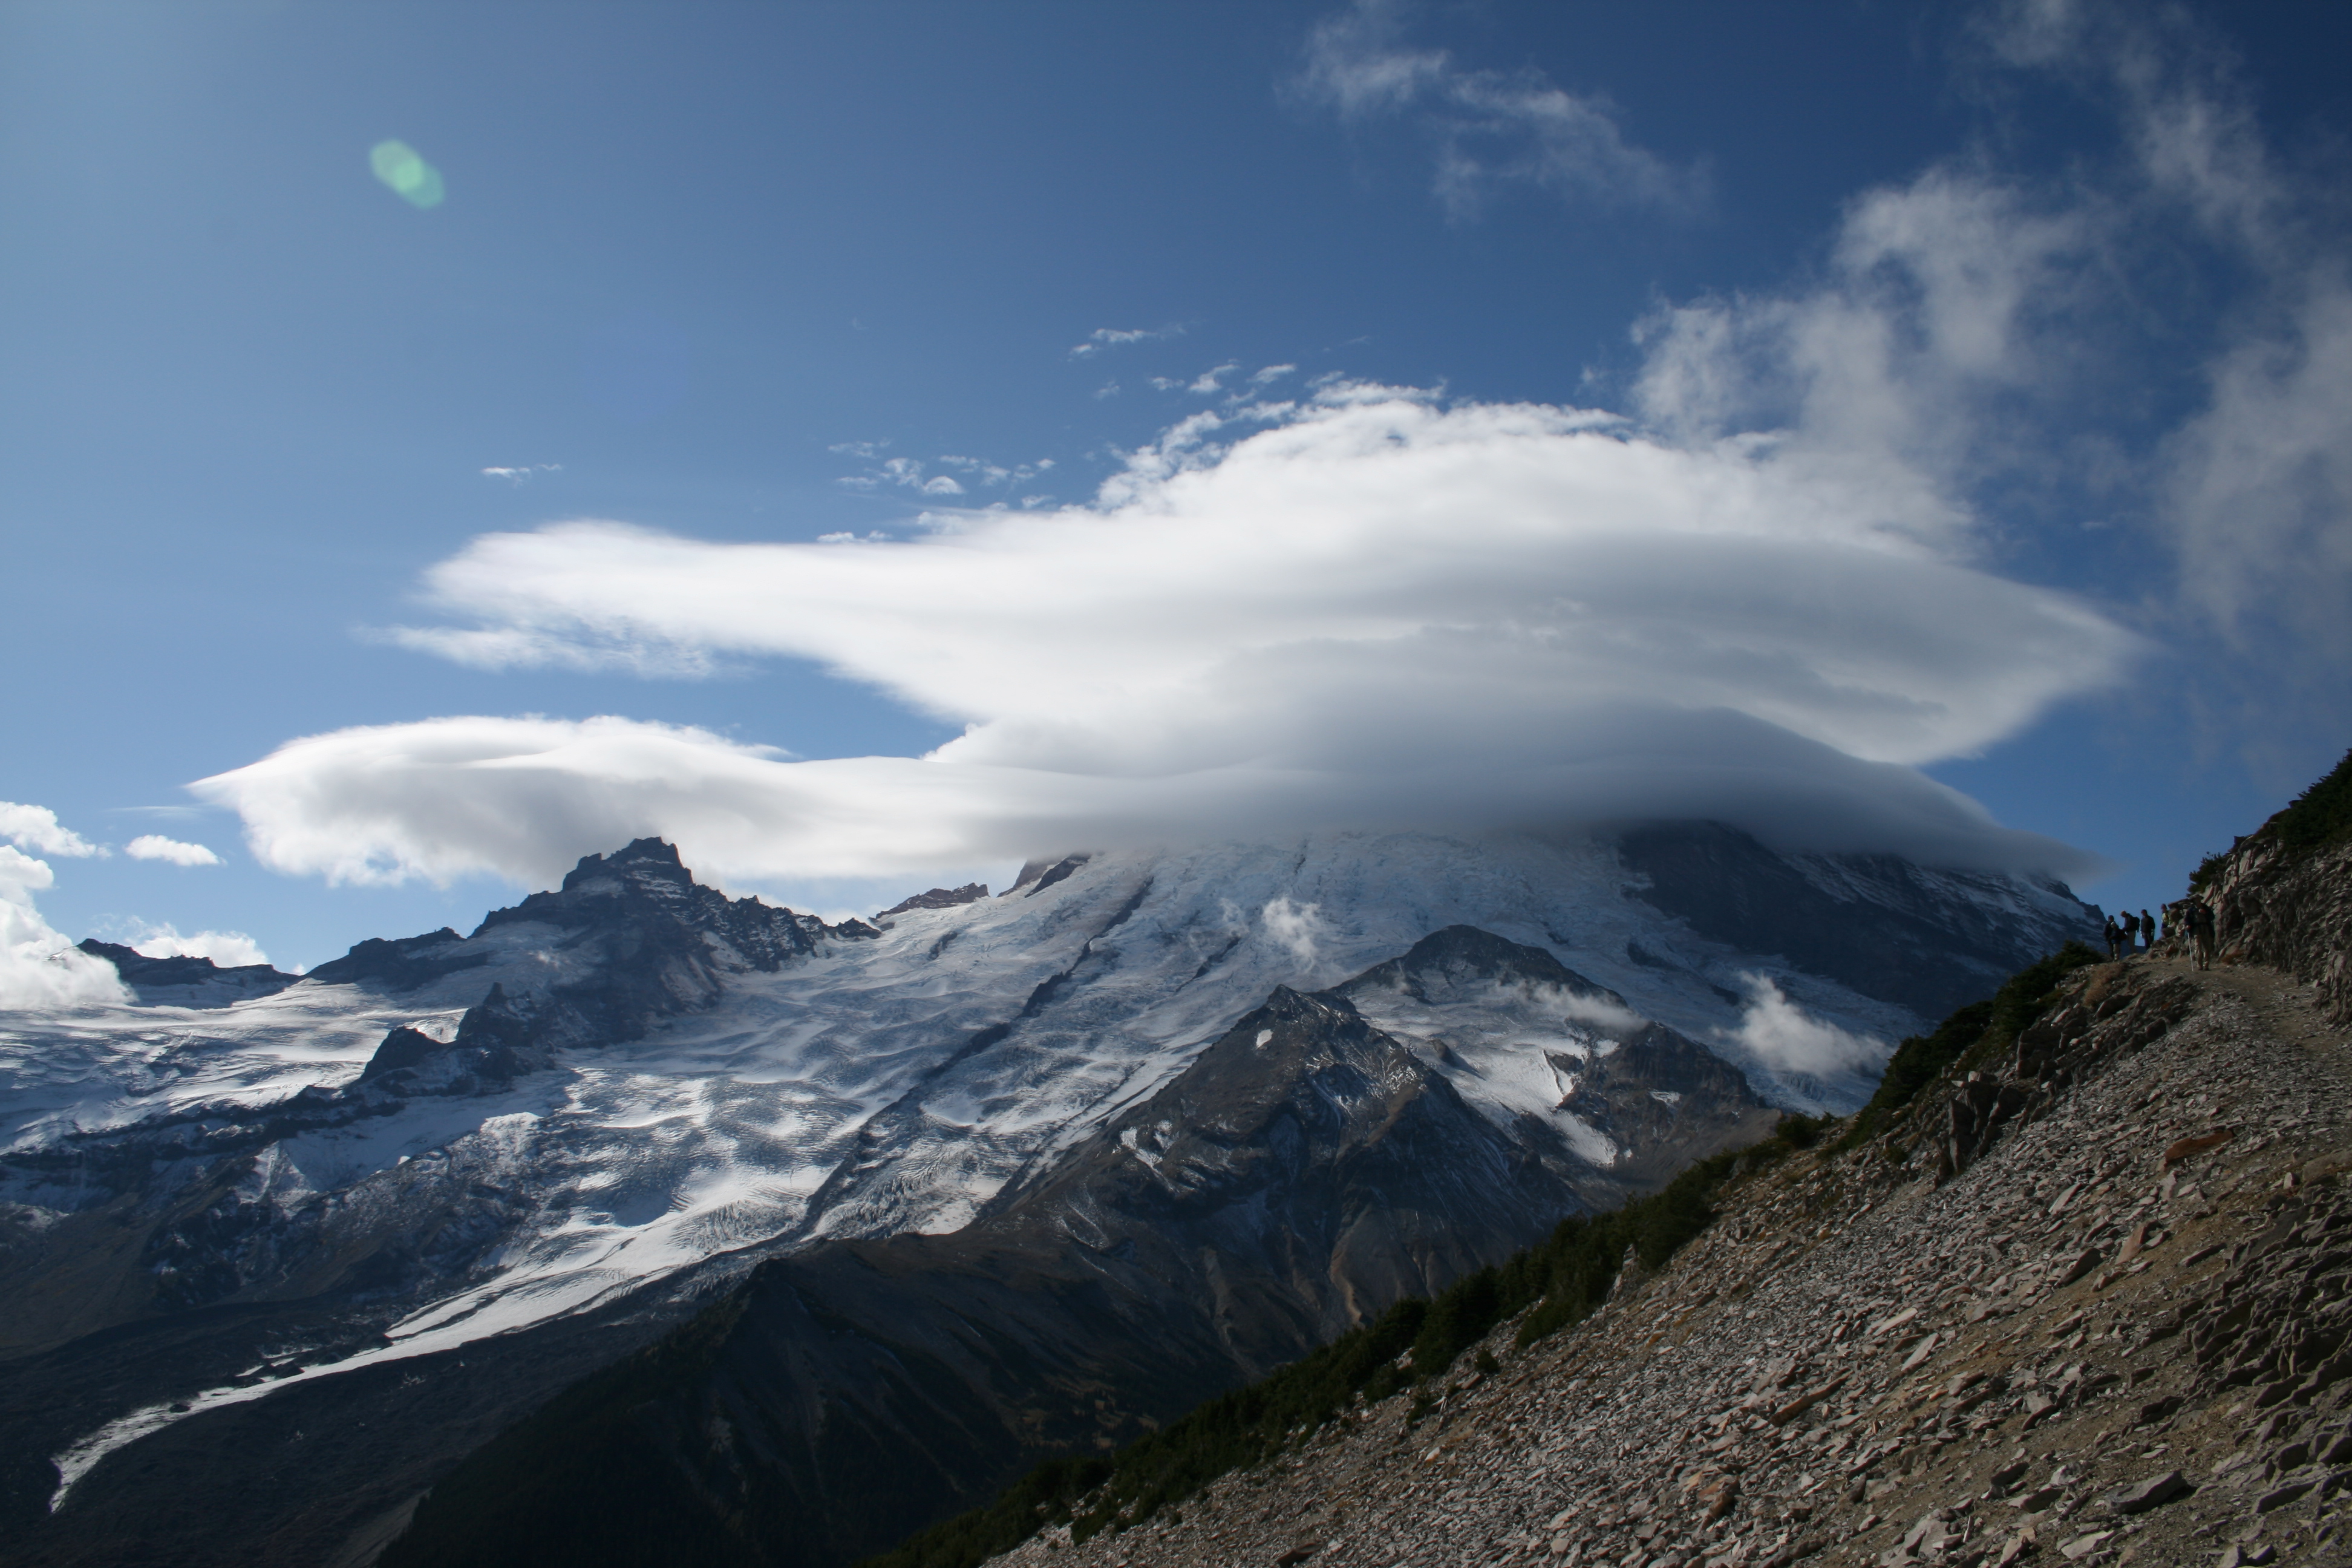 Lenticular clouds form over Mt. Rainier